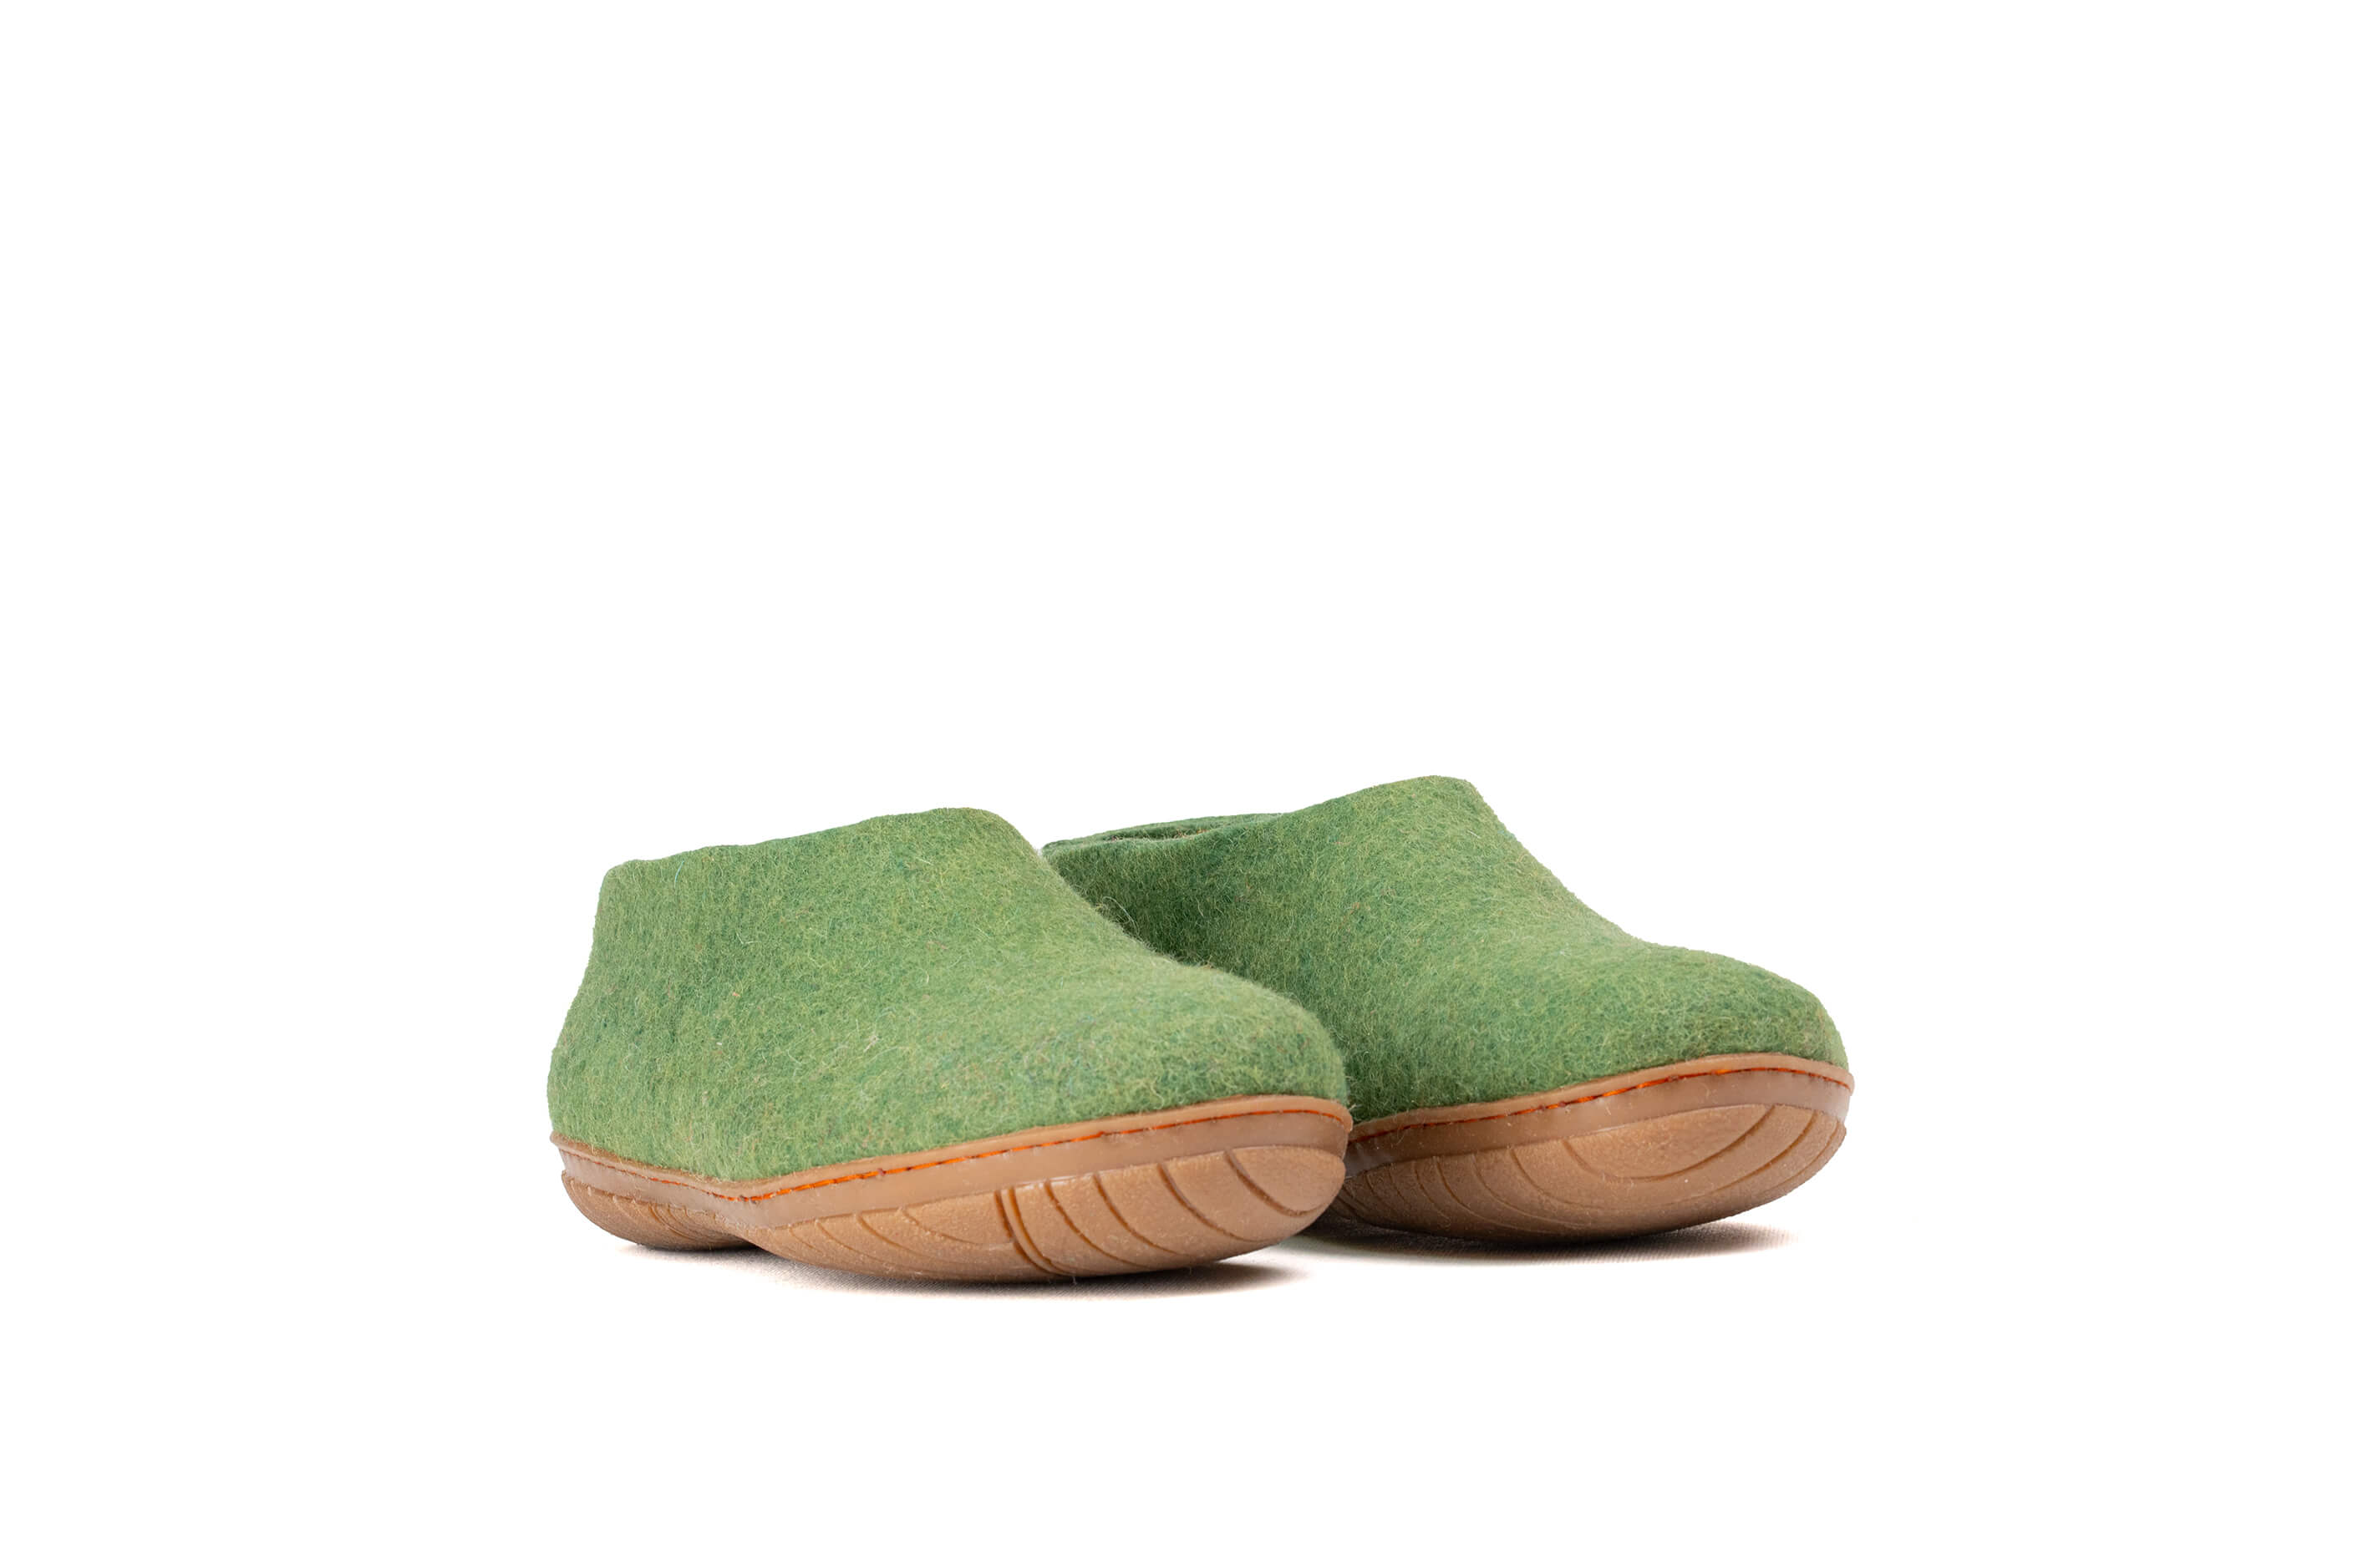 Chaussures outdoor avec semelle en caoutchouc - Vert